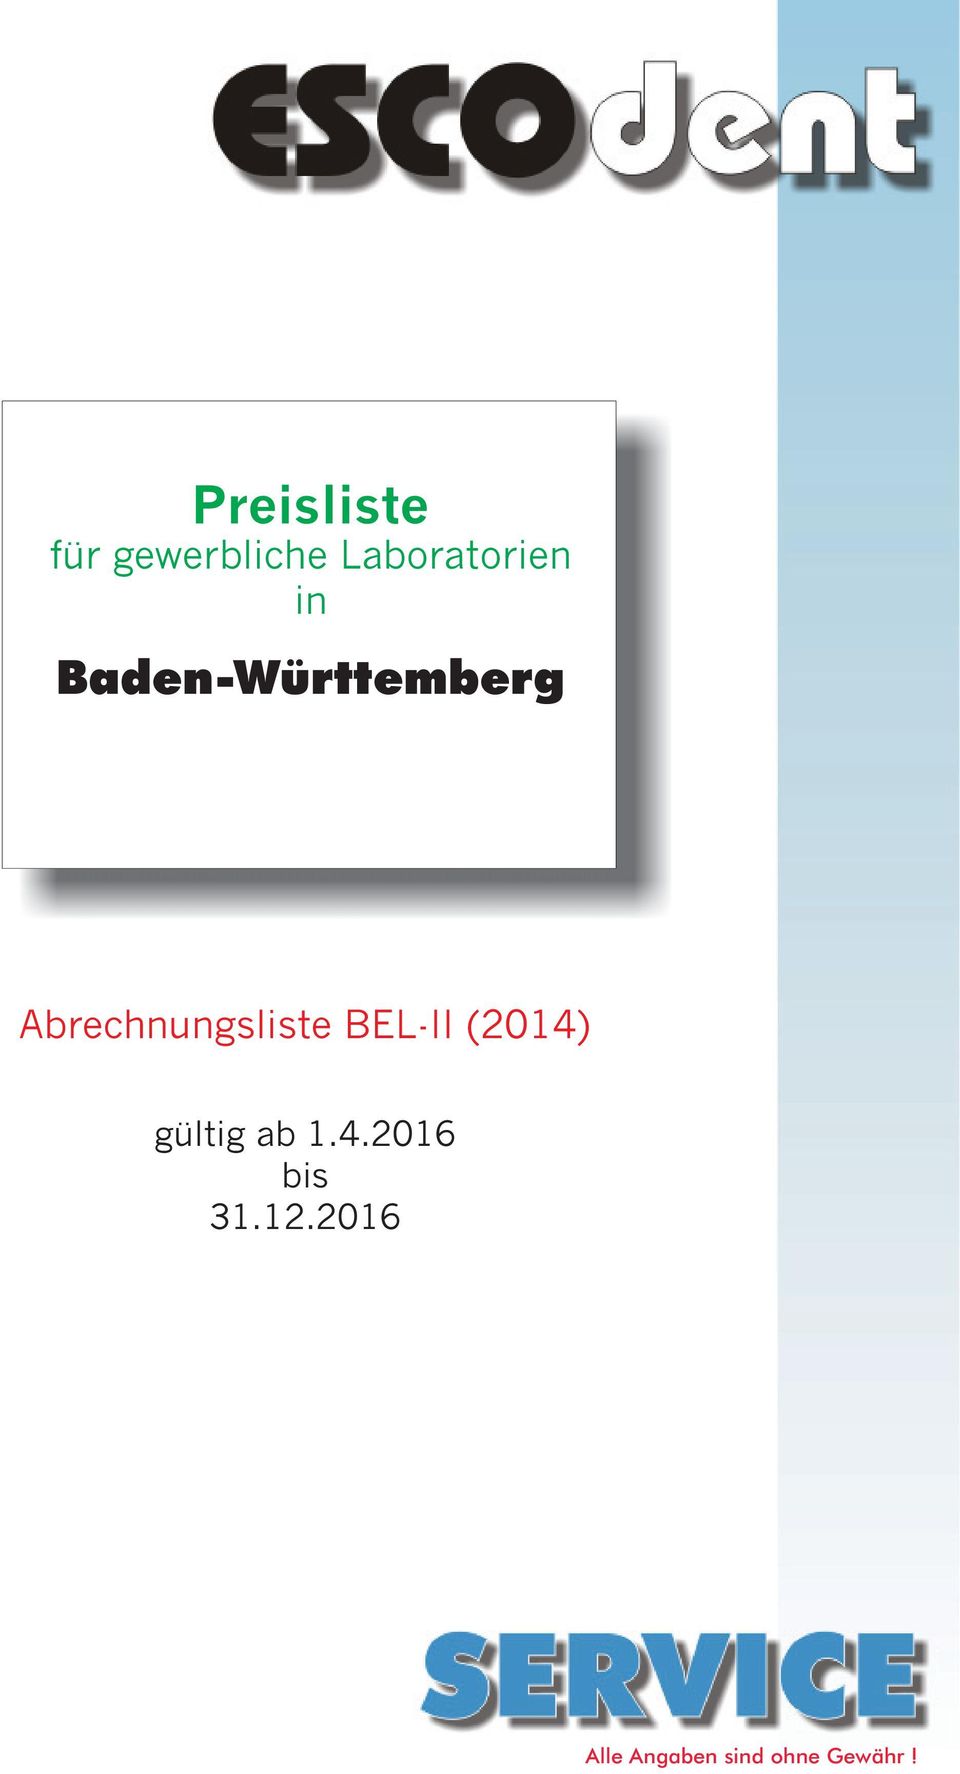 Abrechnungsliste BEL-II (2014) gültig